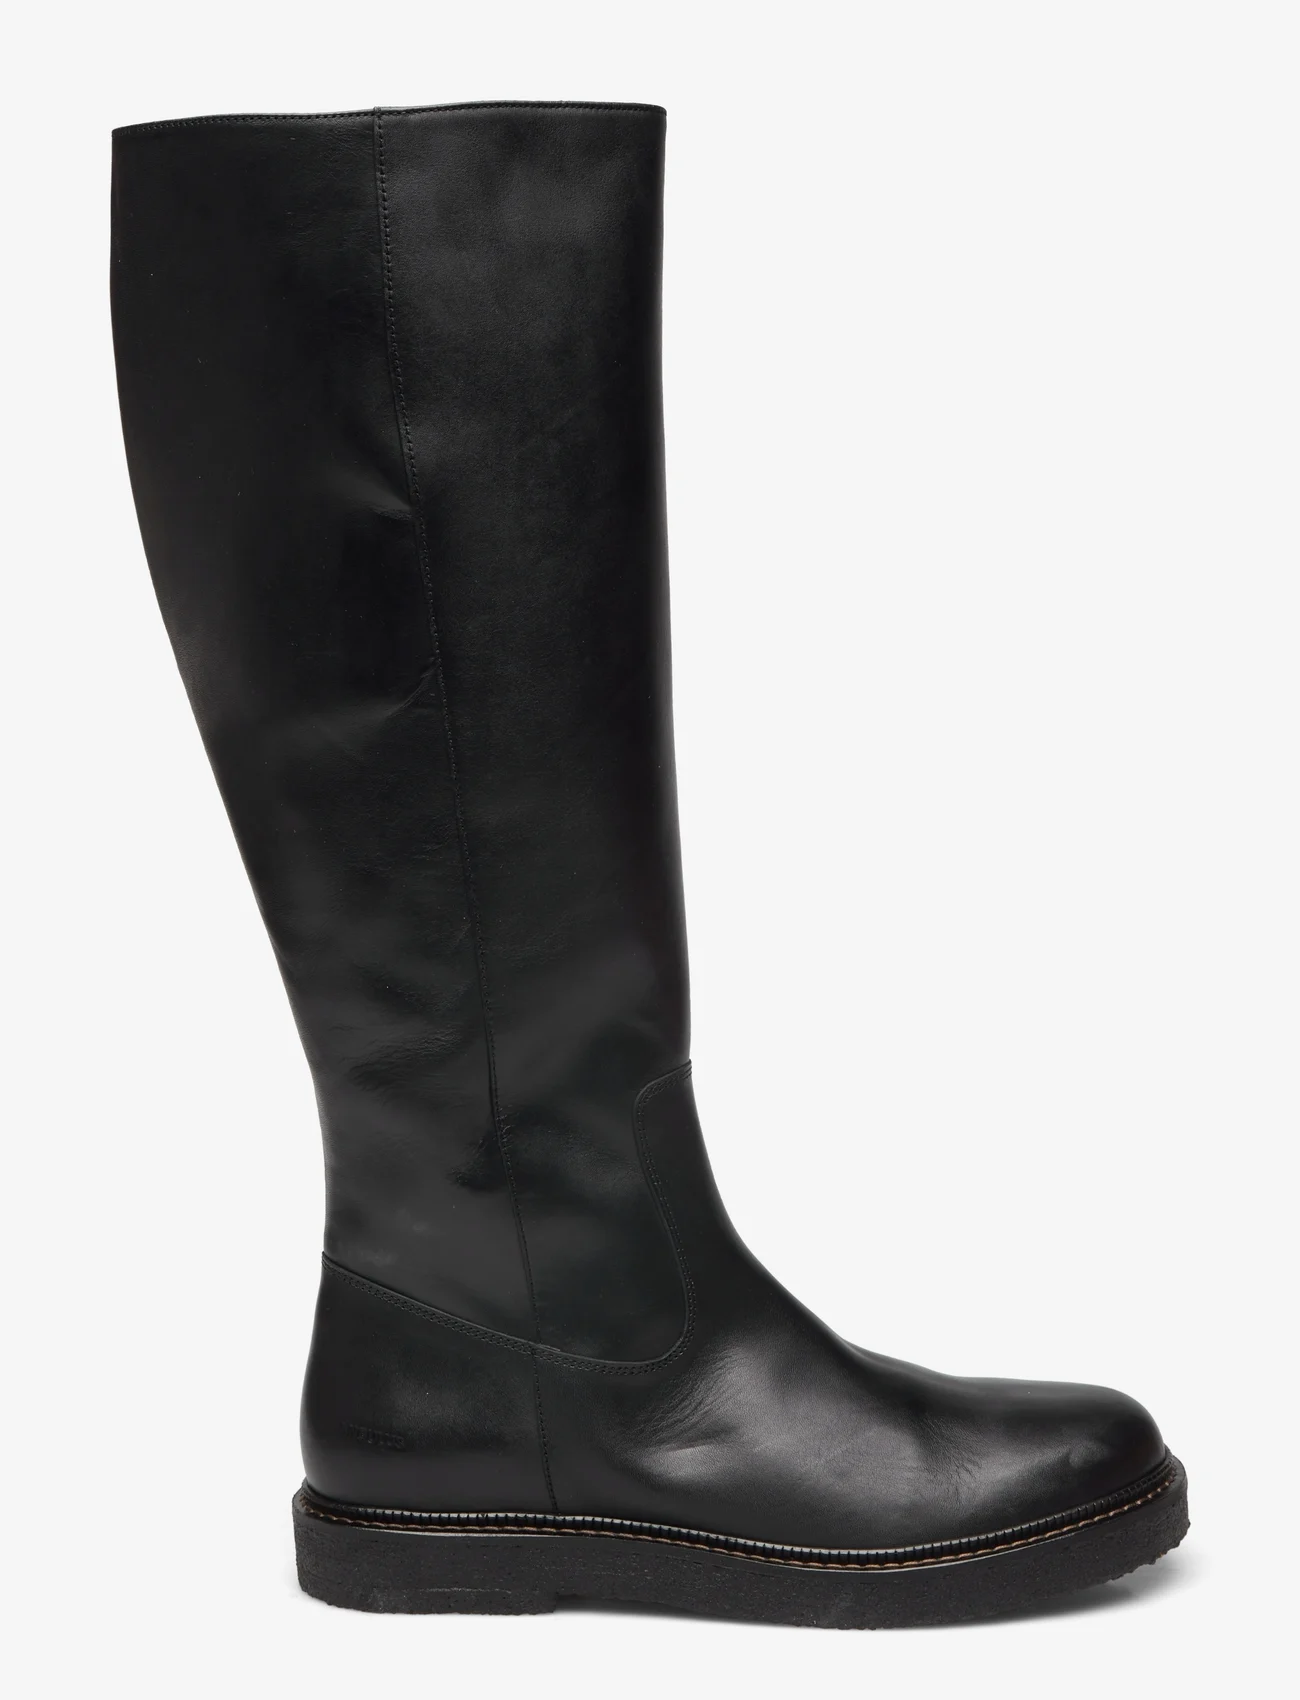 ANGULUS - Boots - flat - kniehohe stiefel - 1604/001 black/black - 1